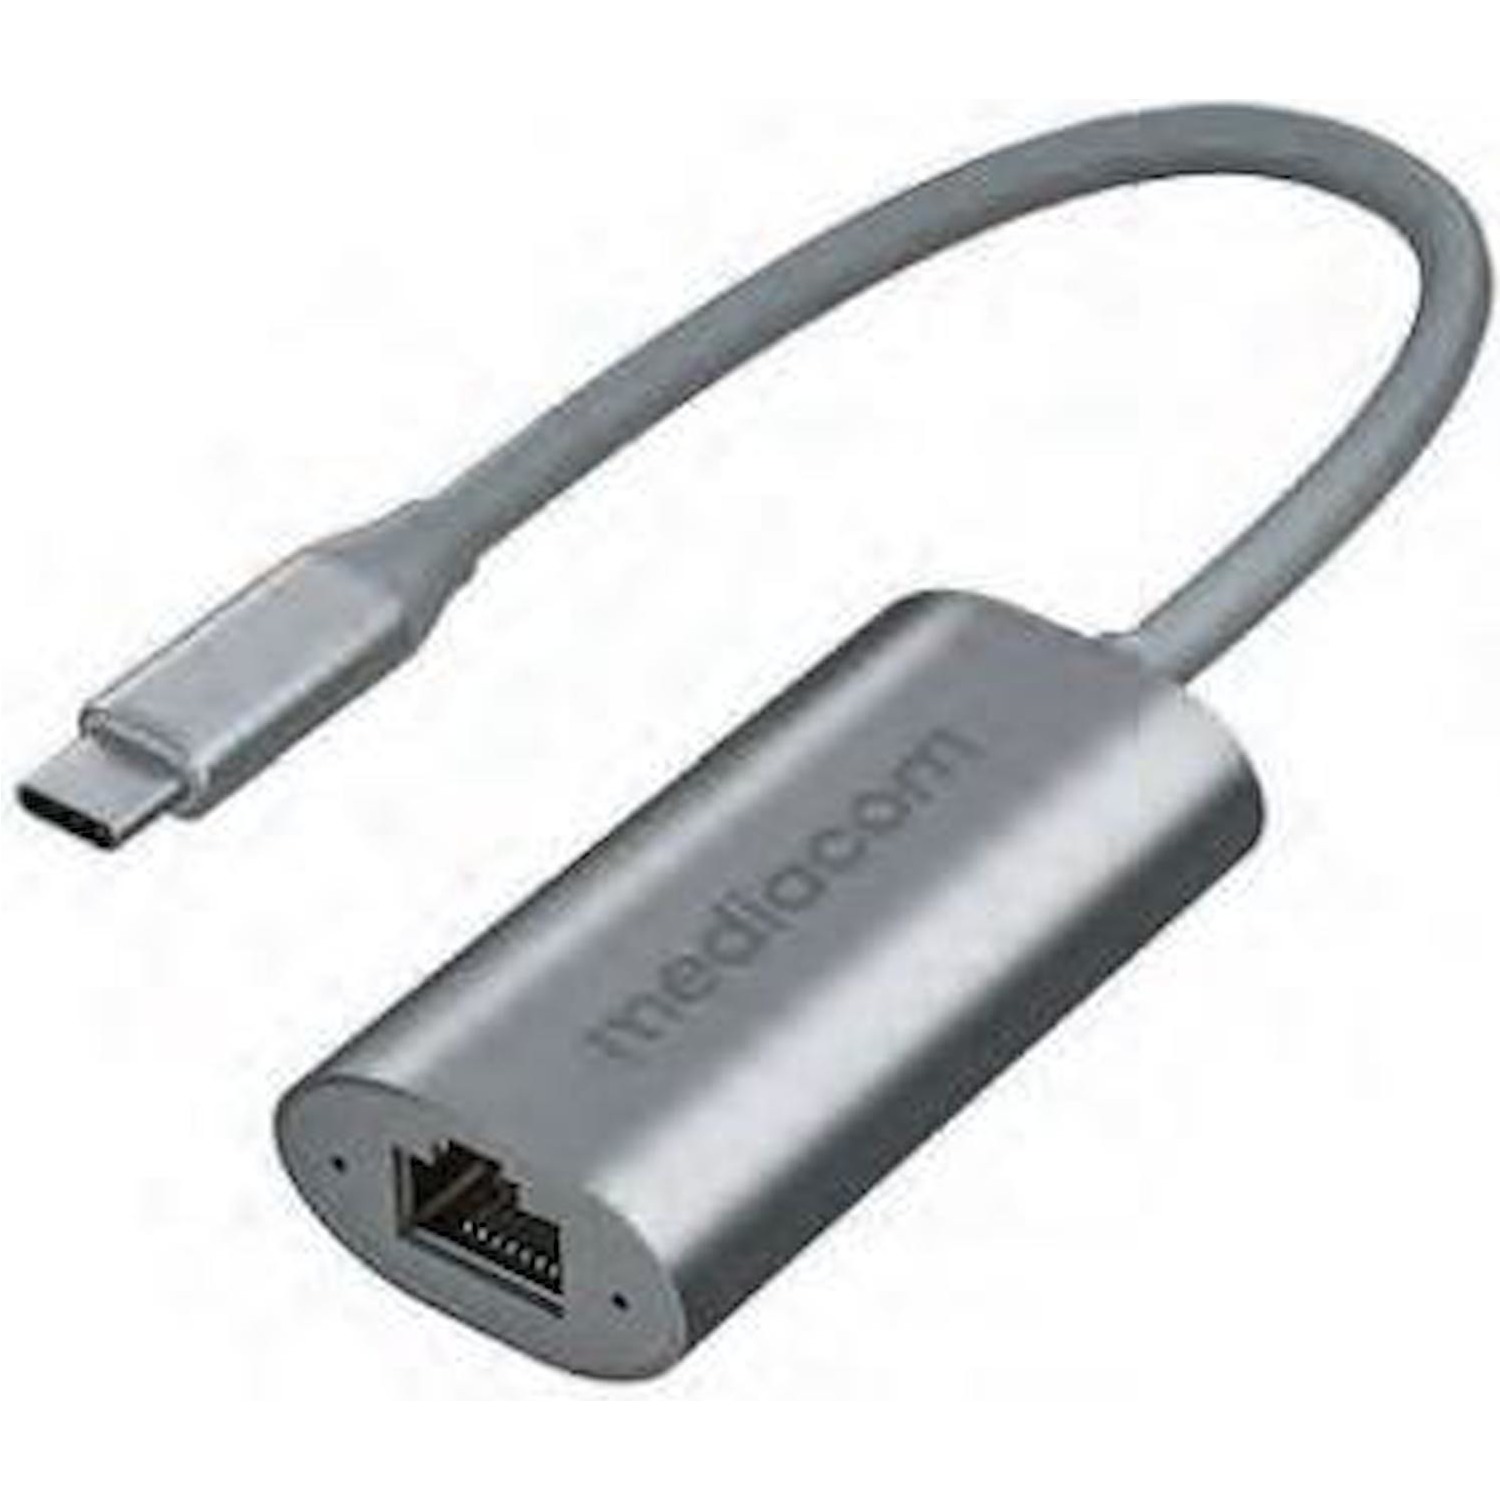 Immagine per Adattatore Mediacom USB-C to Gigabit Lan alluminio da DIMOStore